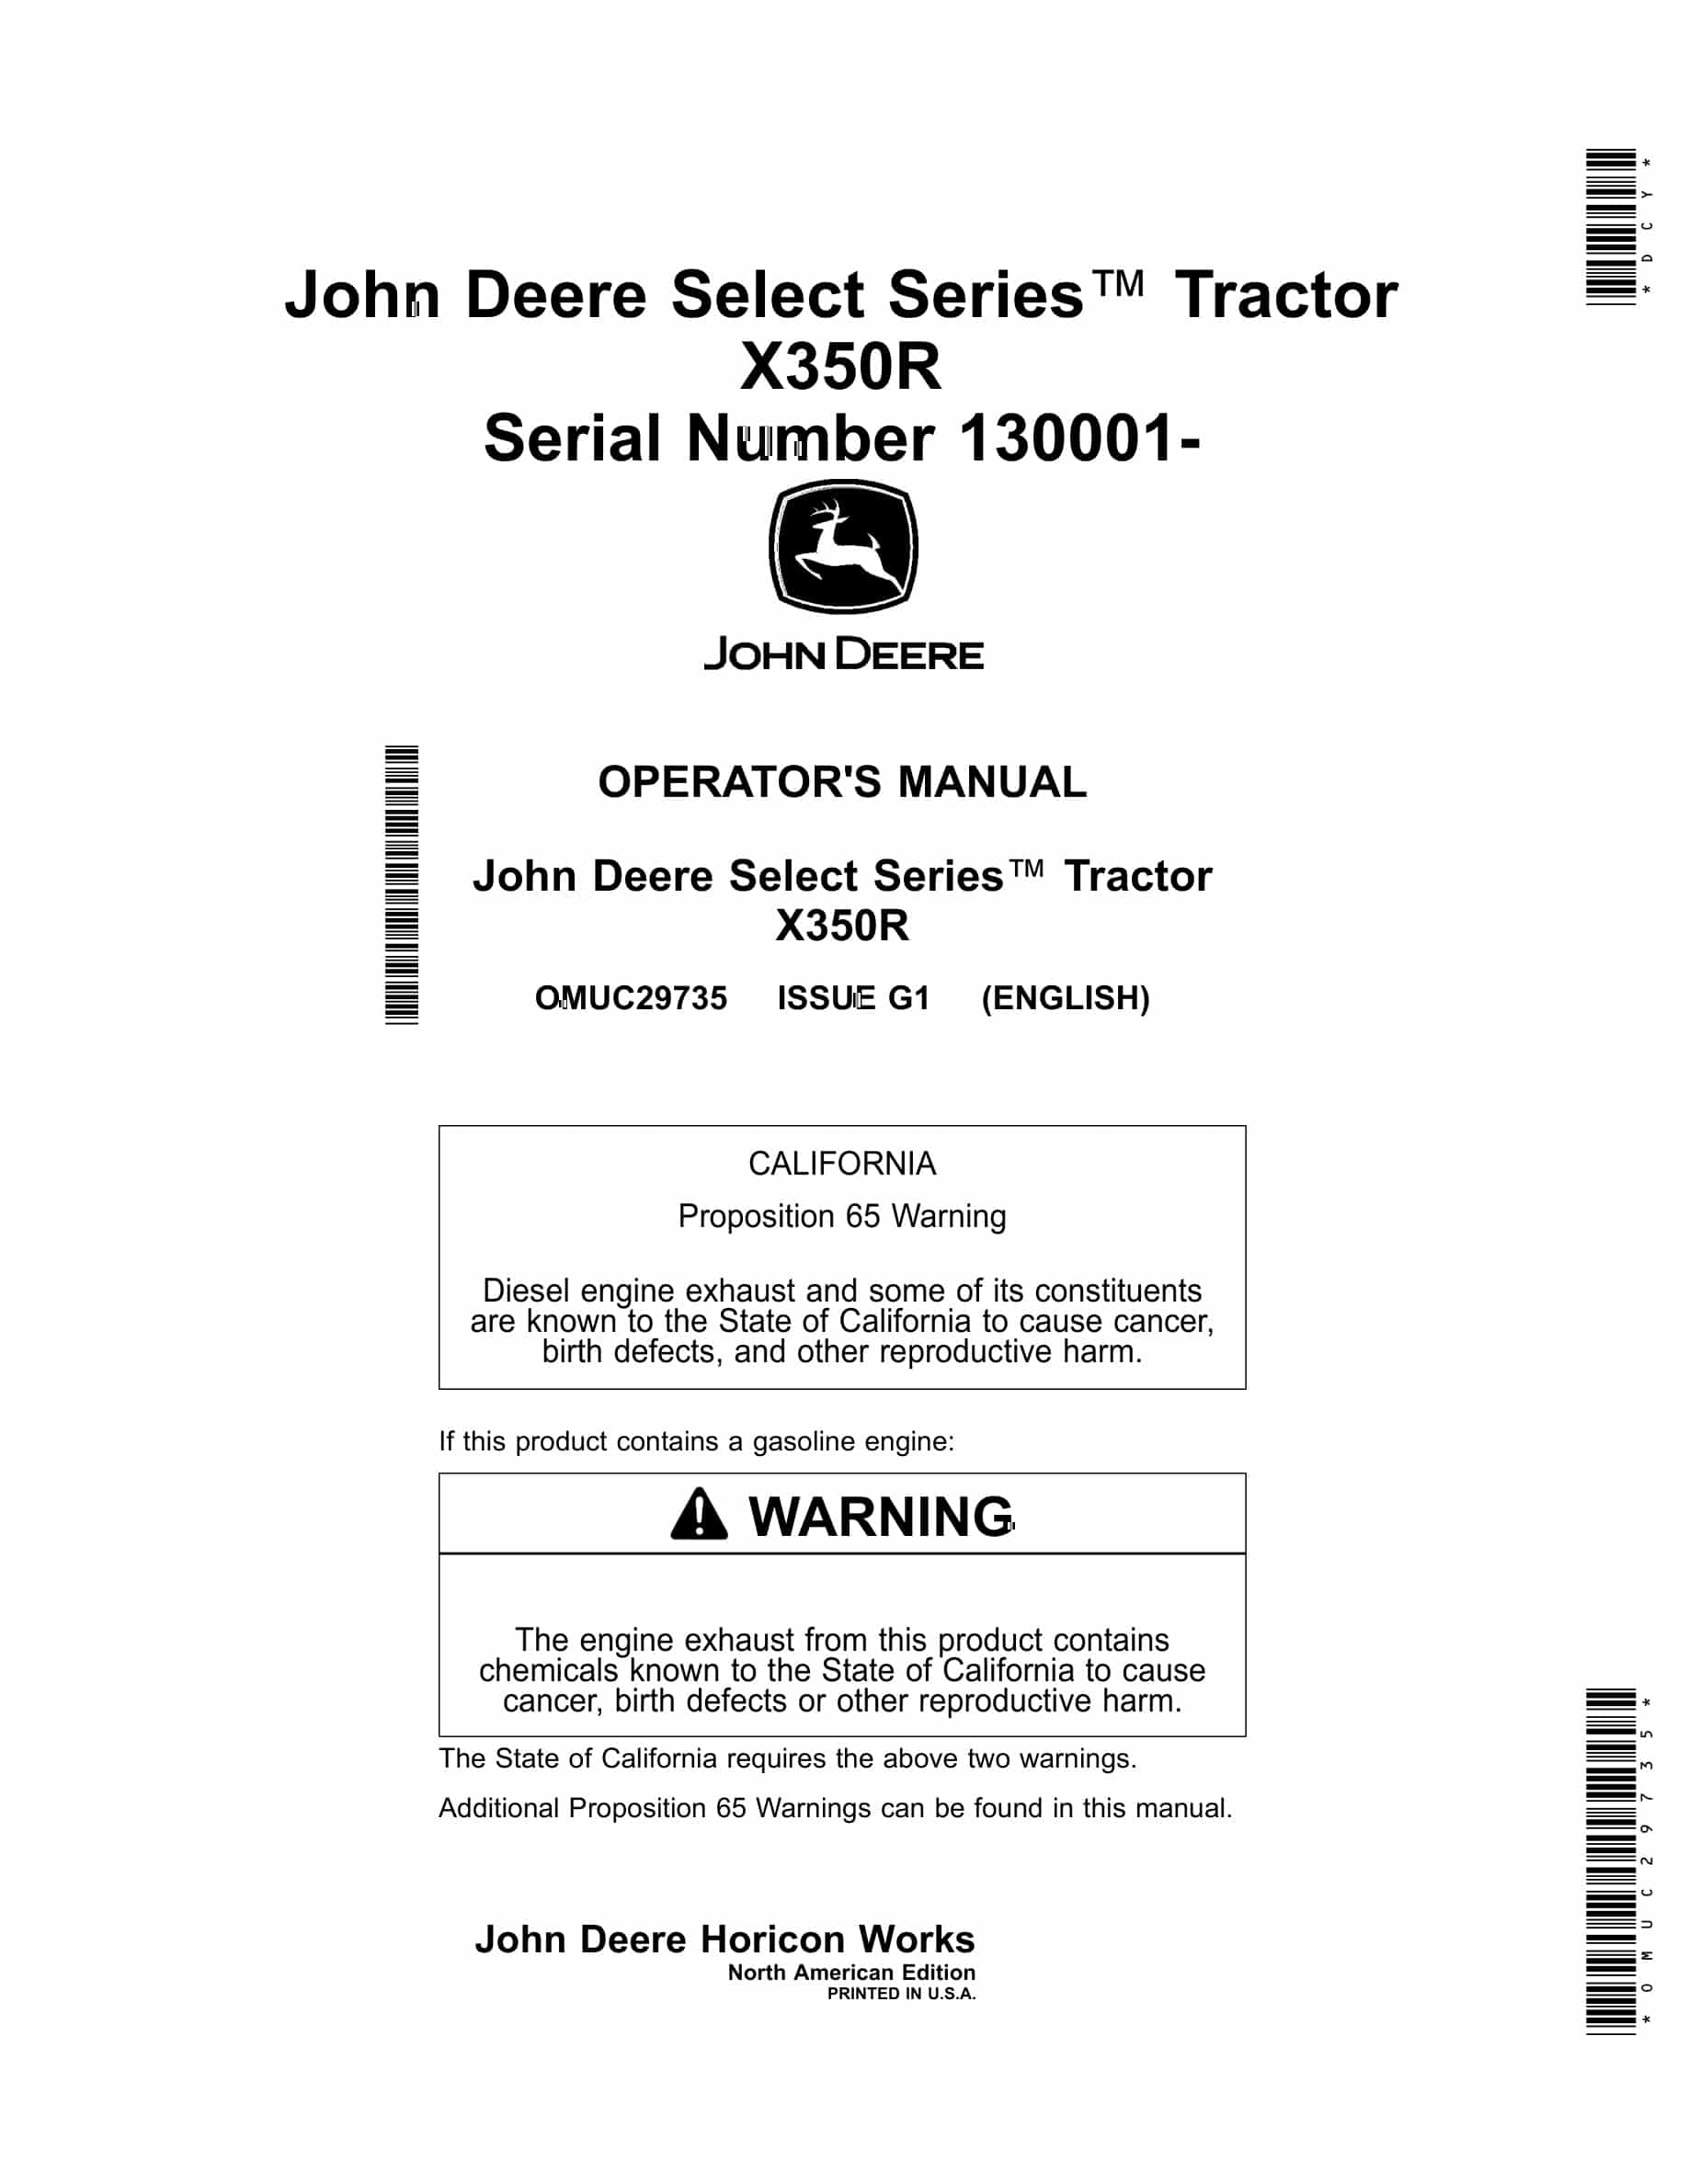 John Deere X350R Tractor Operator Manual OMUC29735-1